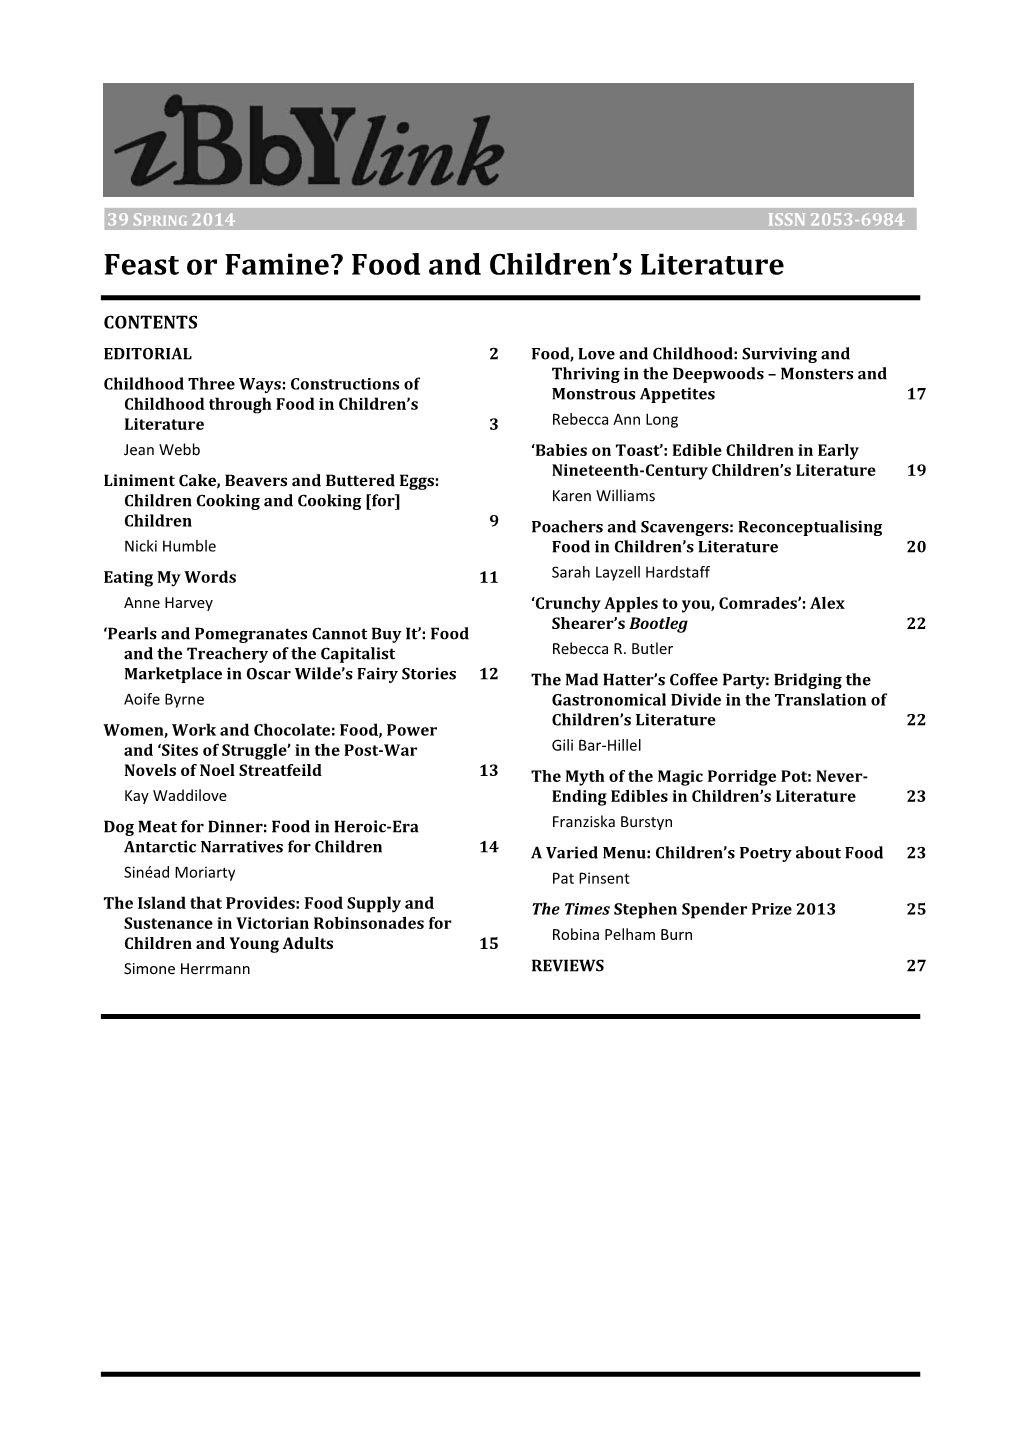 Food and Children's Literature